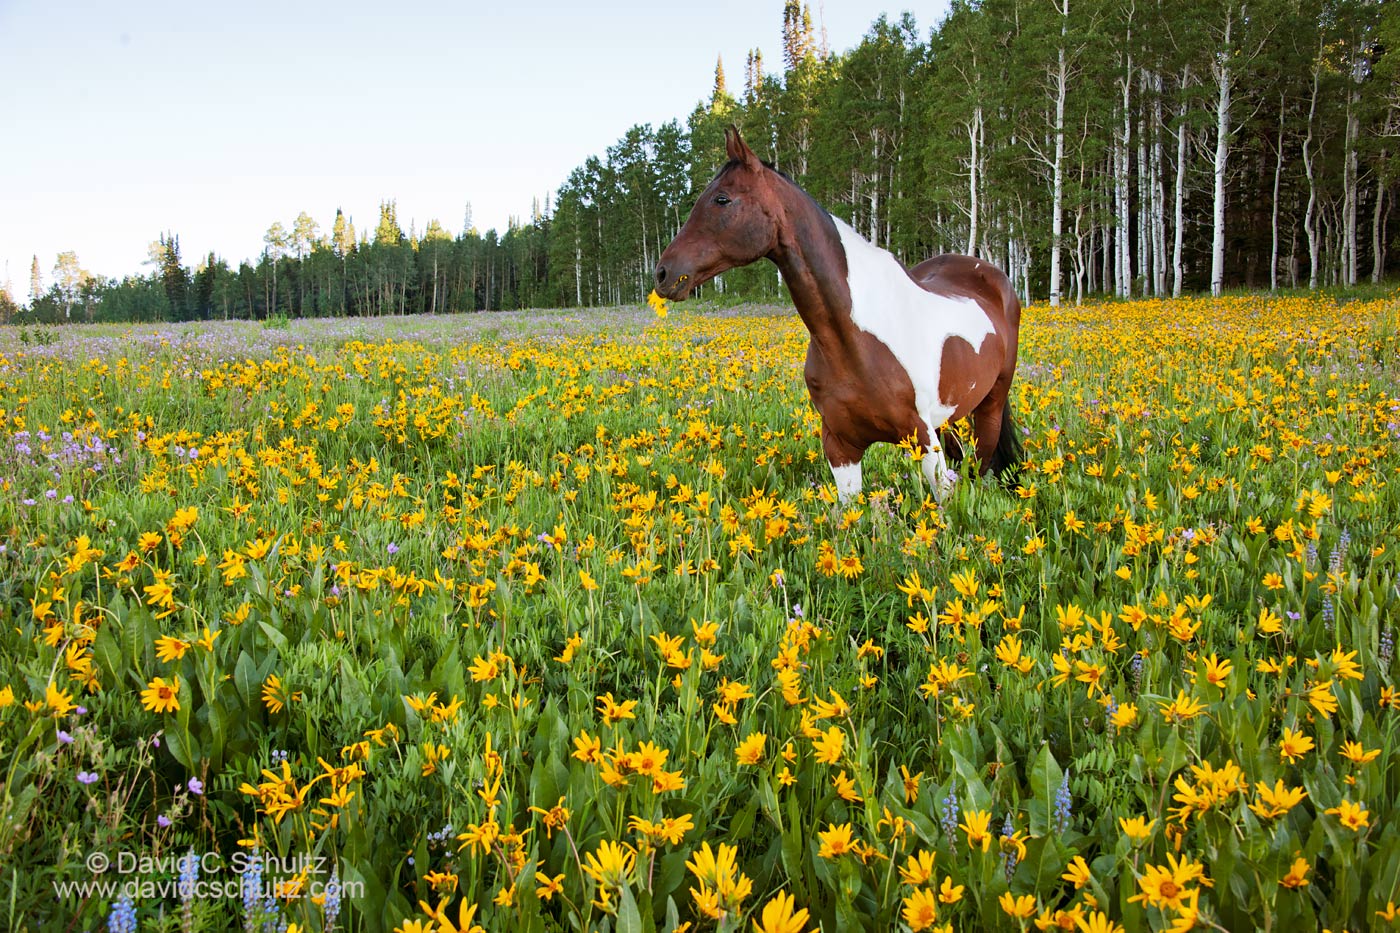 Horse in wildflowers in the Uinta Mountains, Utah - Image #47-831